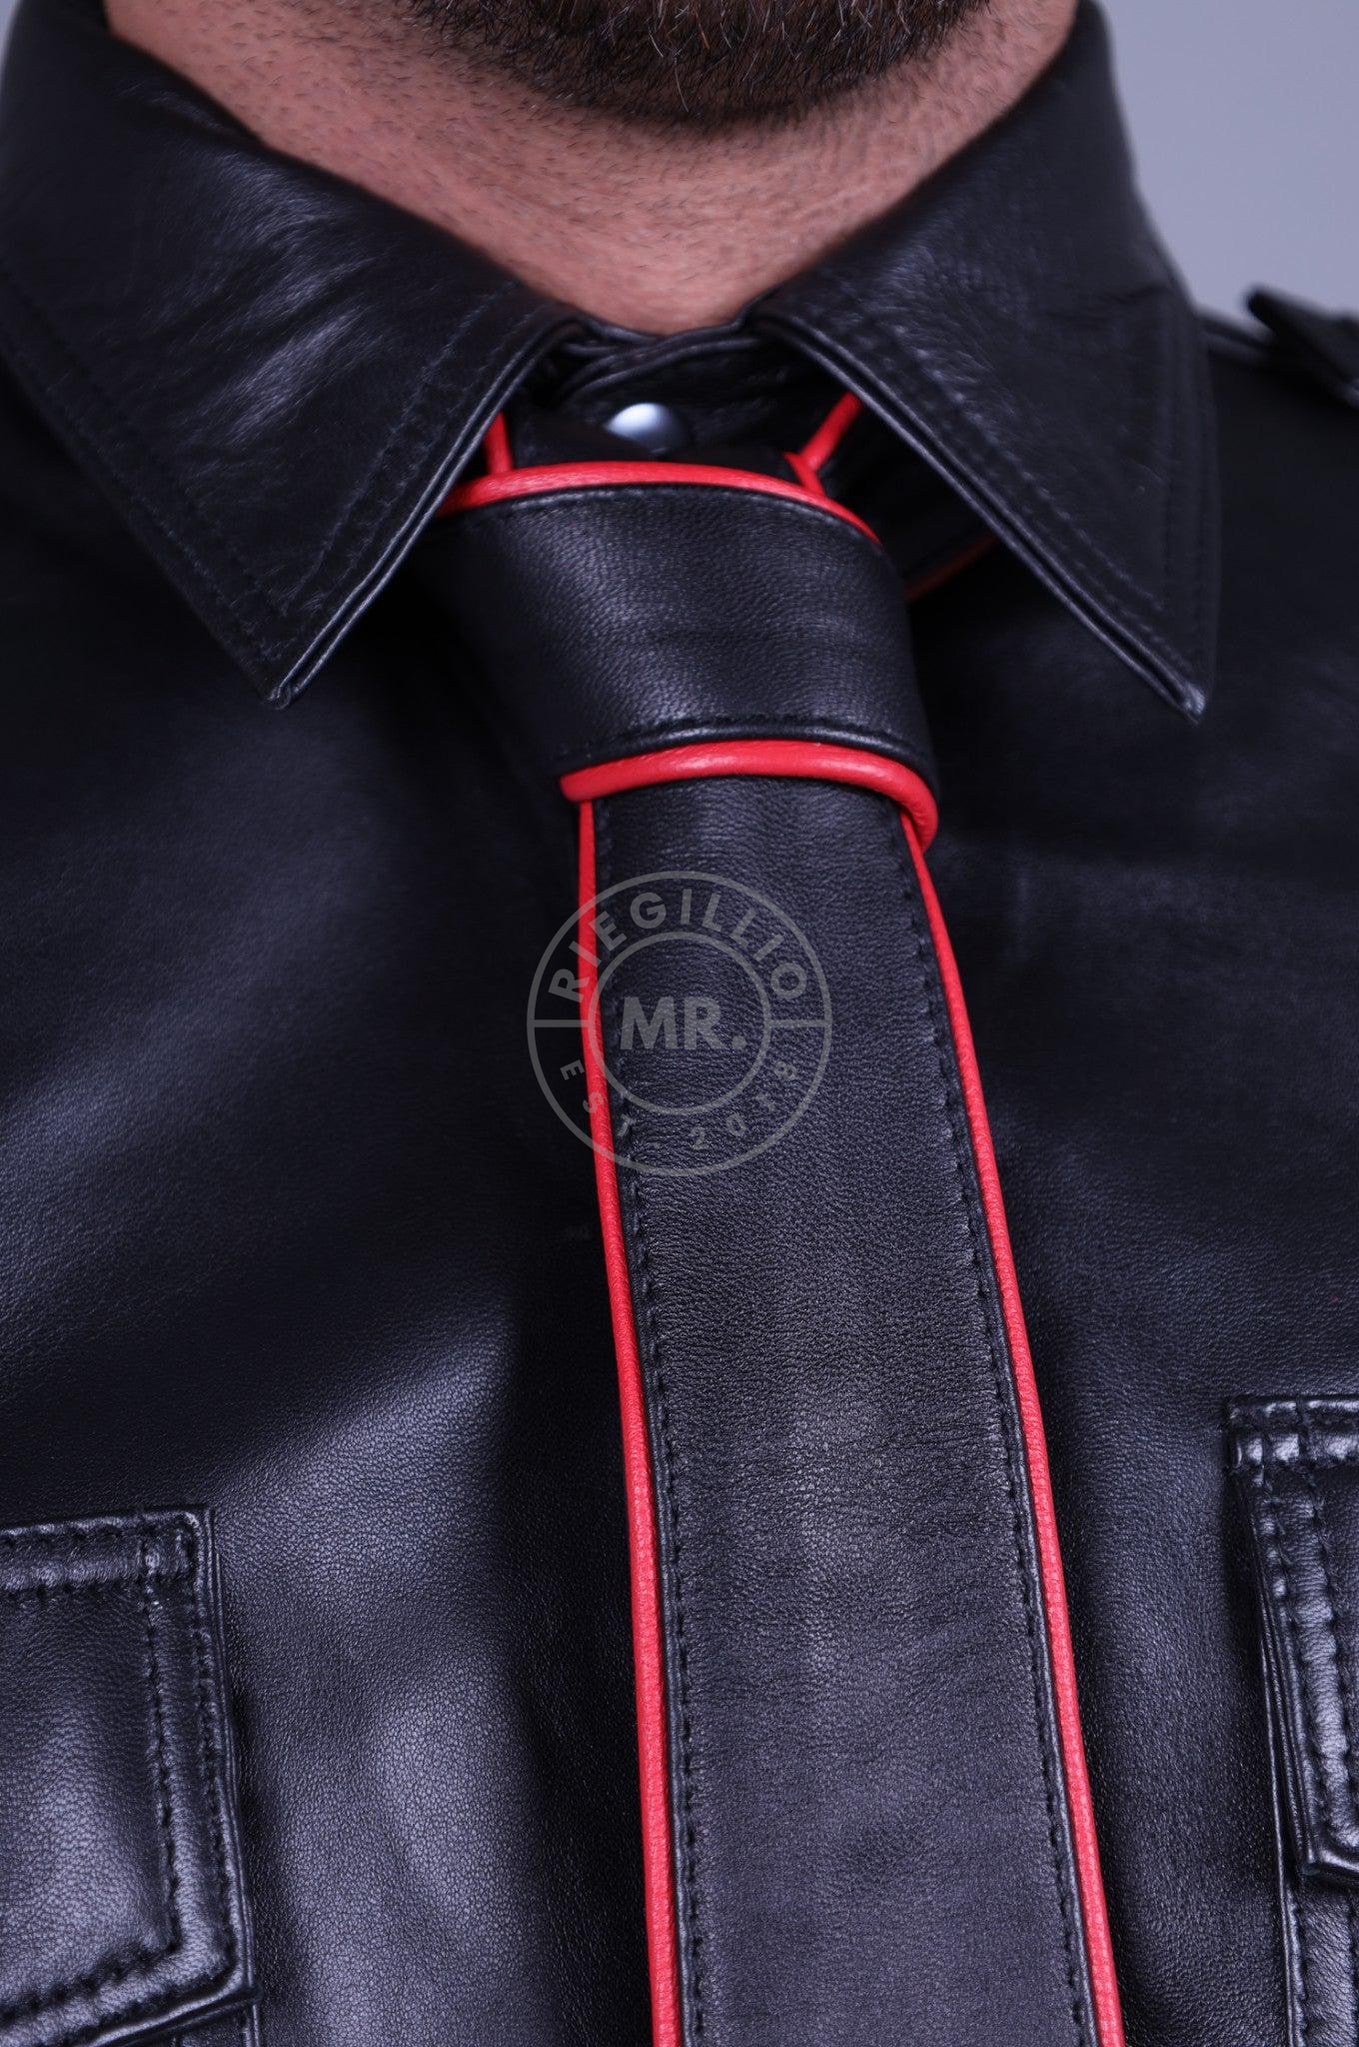 Black Leather Tie - RED Piping-at MR. Riegillio